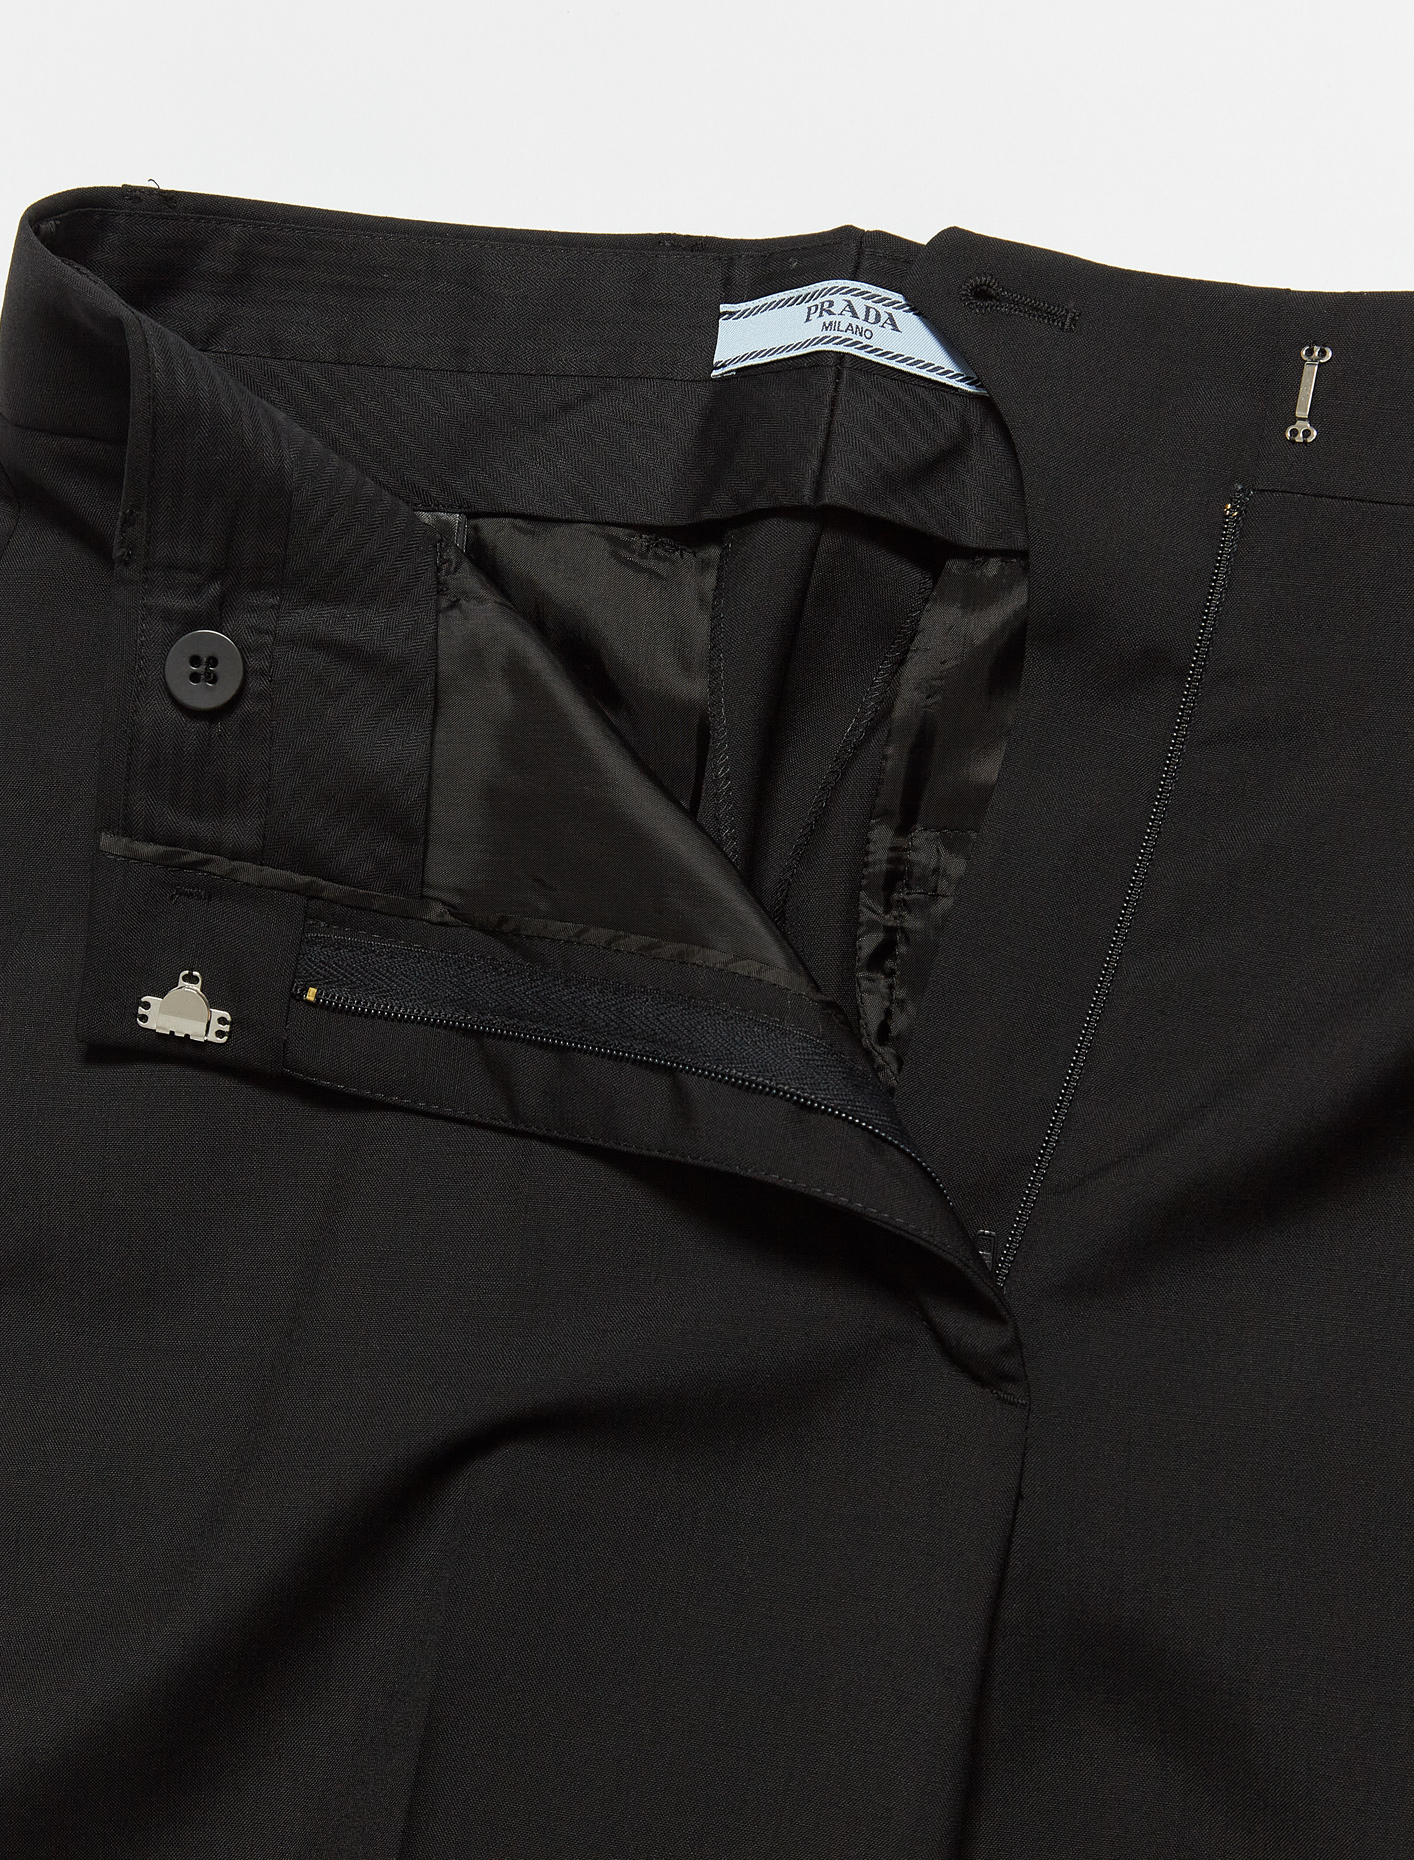 Prada Printed Trouser in Black | Voo Store Berlin | Worldwide Shipping